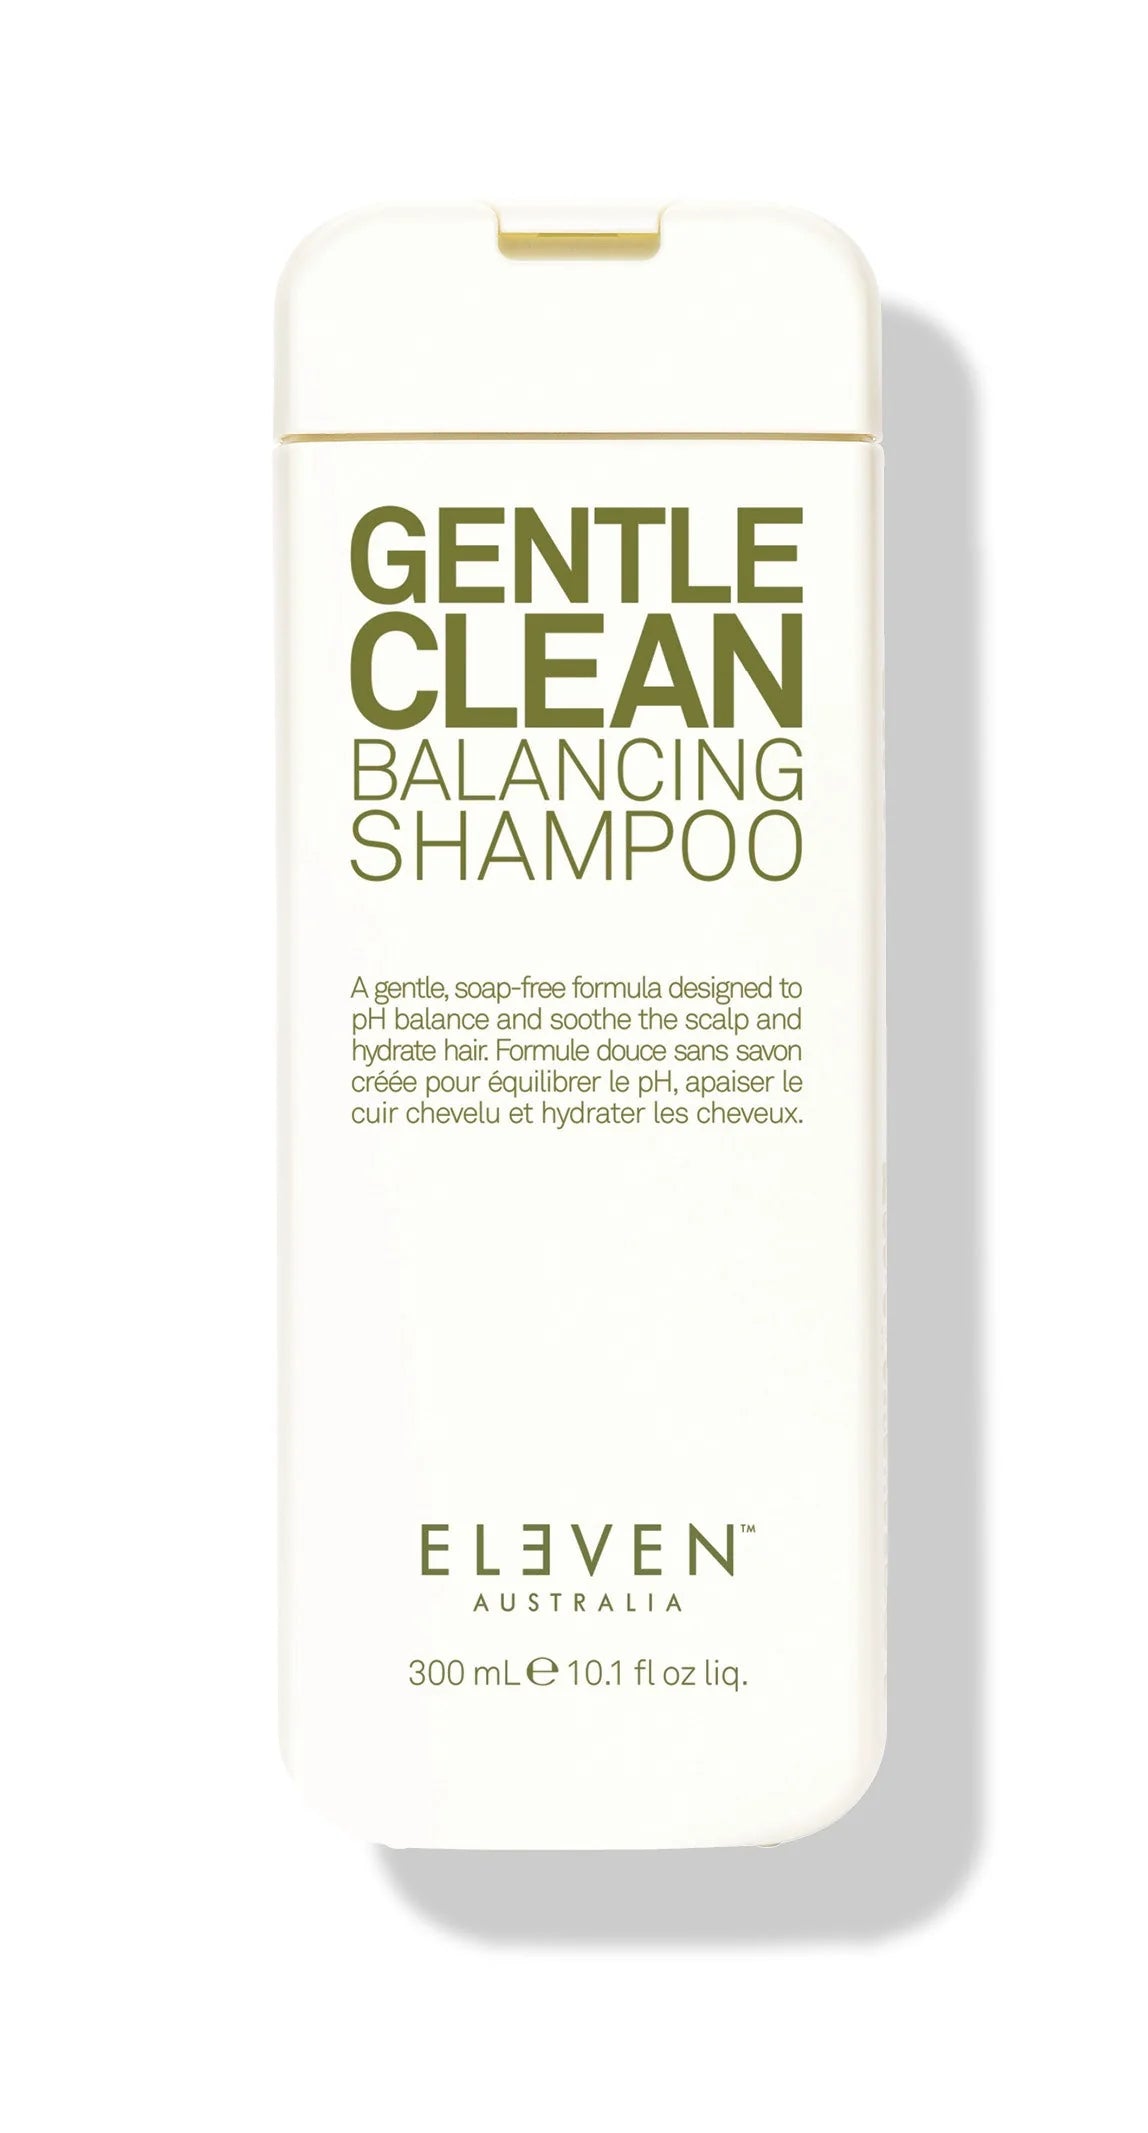 Gentle Clean Balancing Shampoo